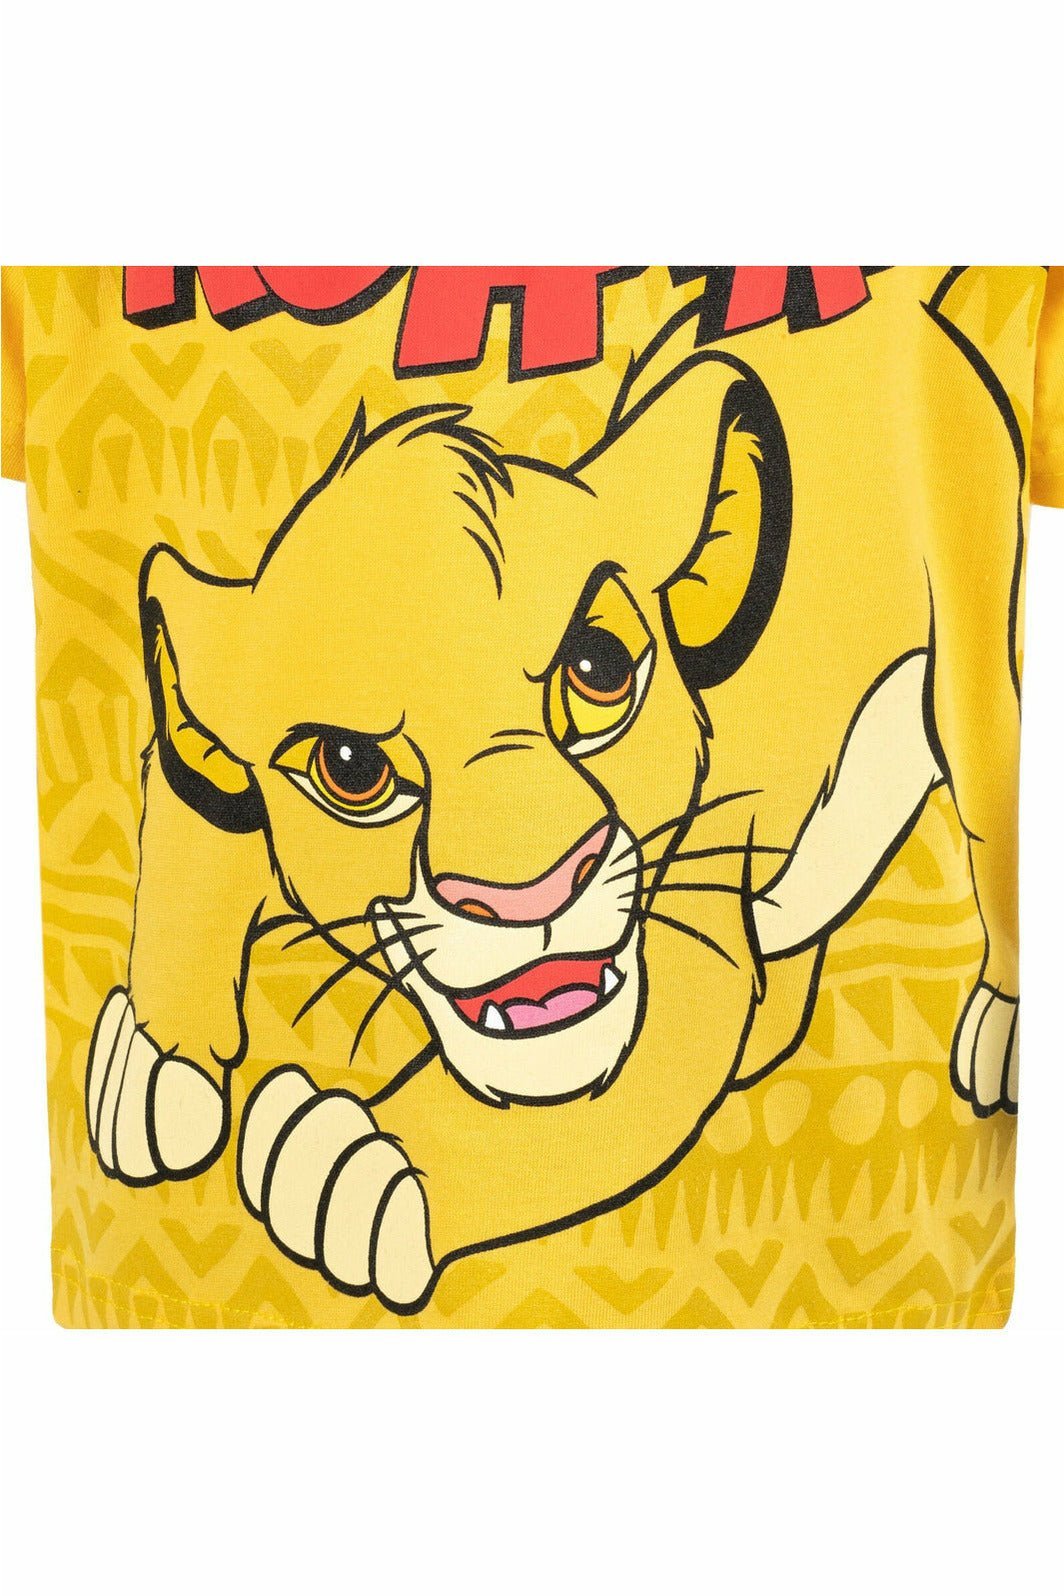 Lion King Simba Graphic T-Shirt & Mesh Shorts - imagikids